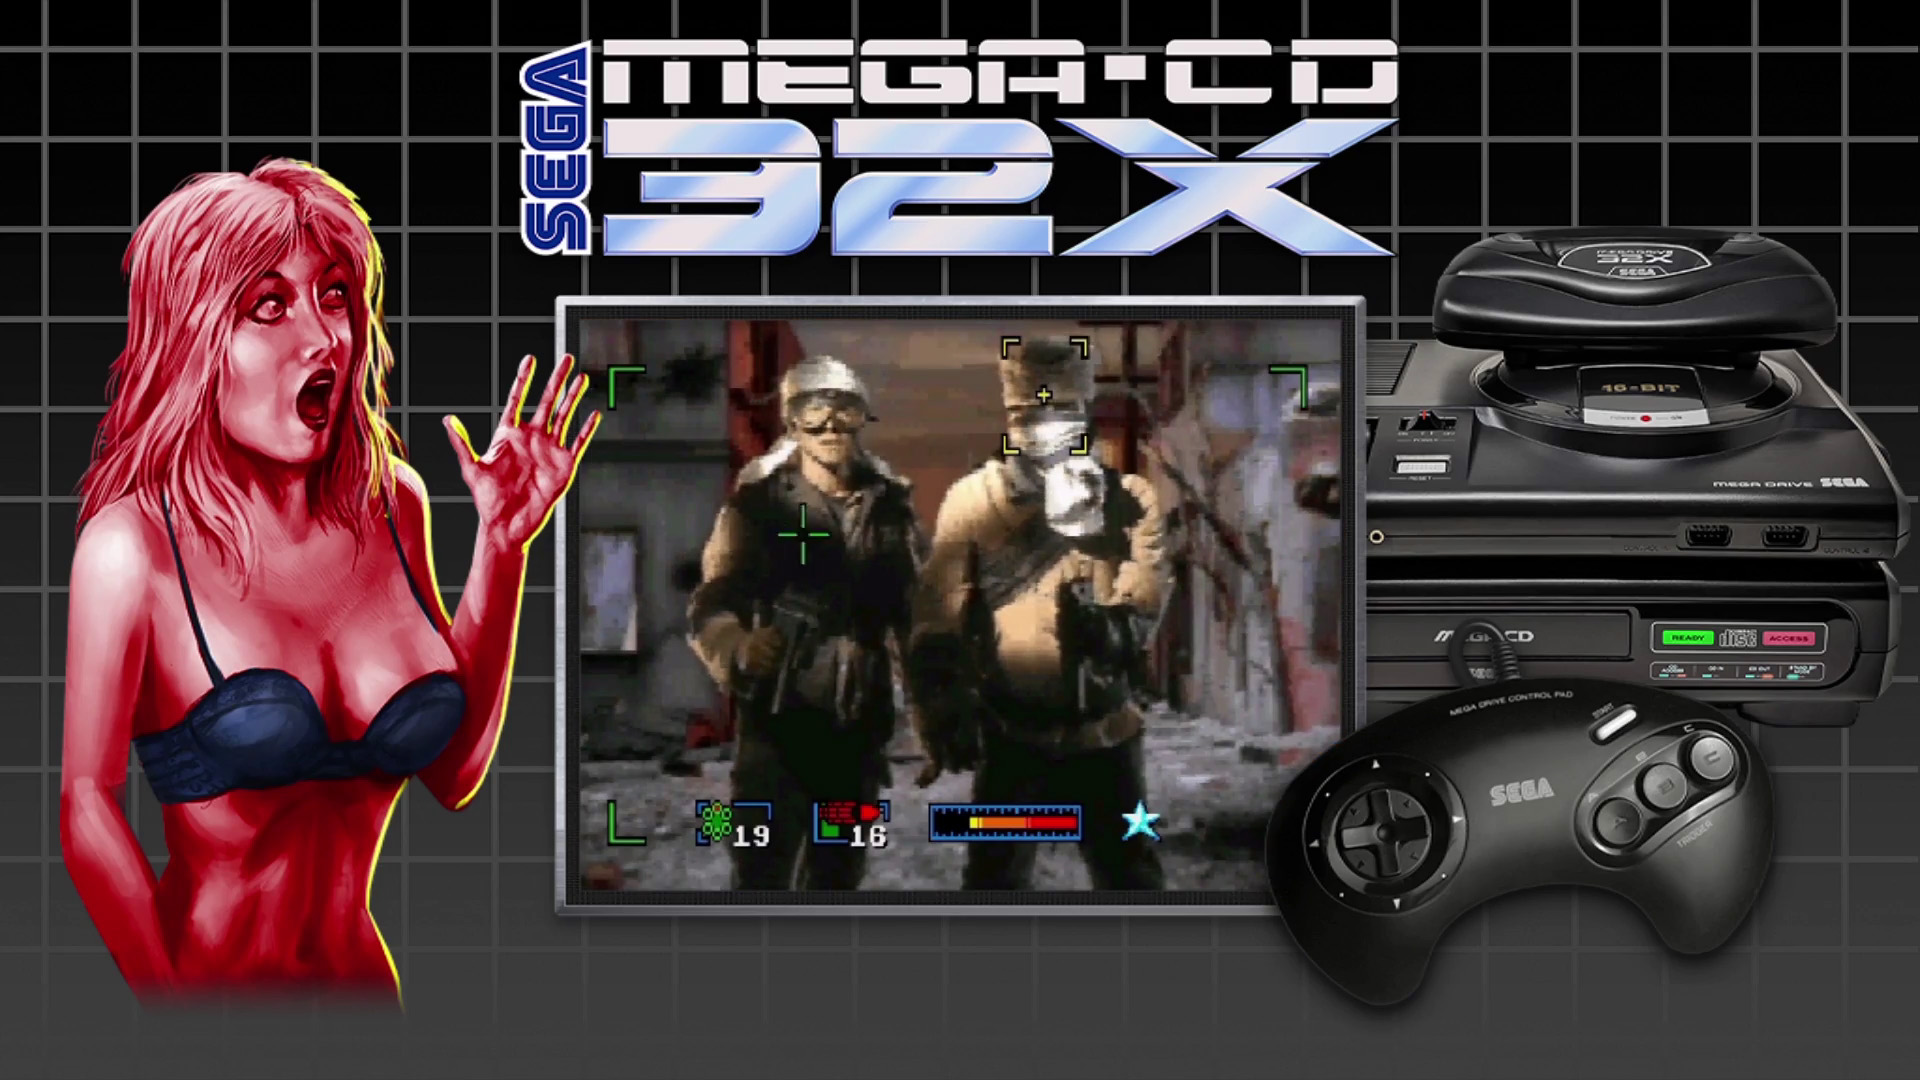 Sega Mega CD 32X Unified Platform Video